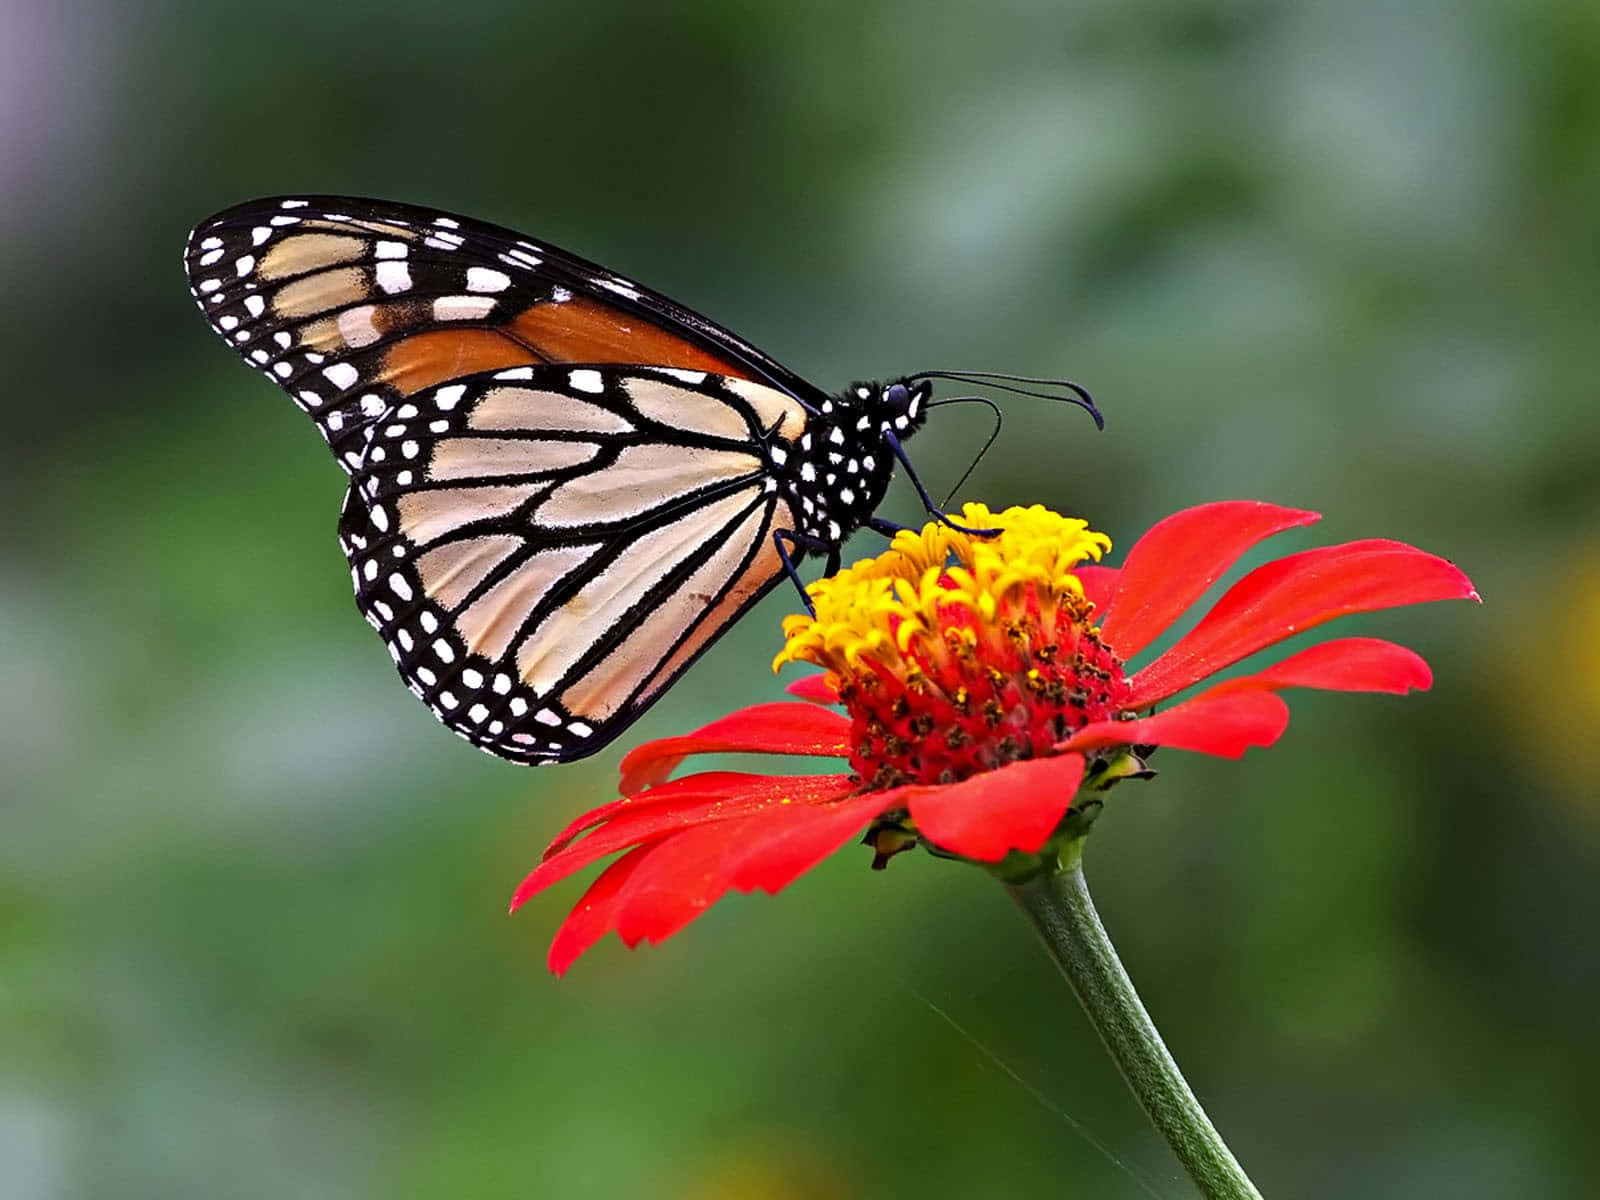 "A Butterfly Enjoying A Colorful Scene" Wallpaper